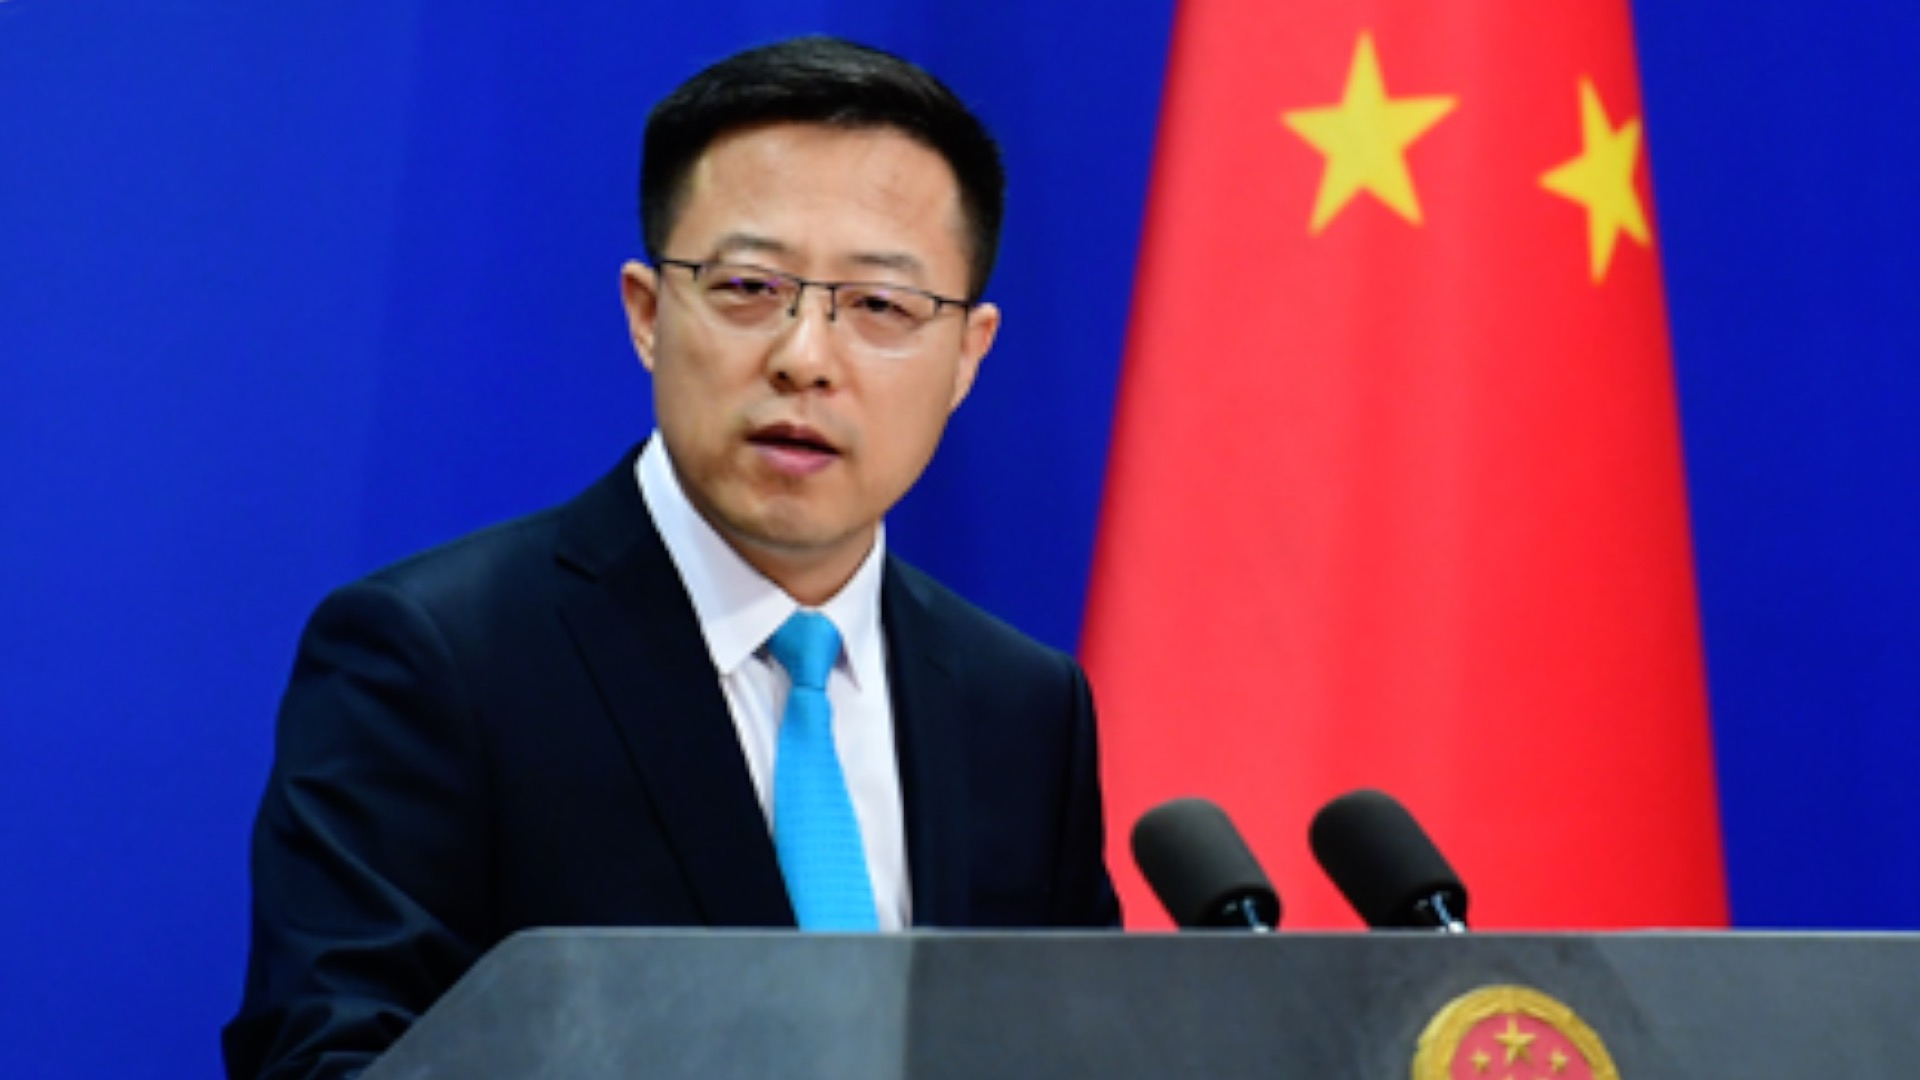 china backs companies' legal fight against u.s. bullying - cgtn